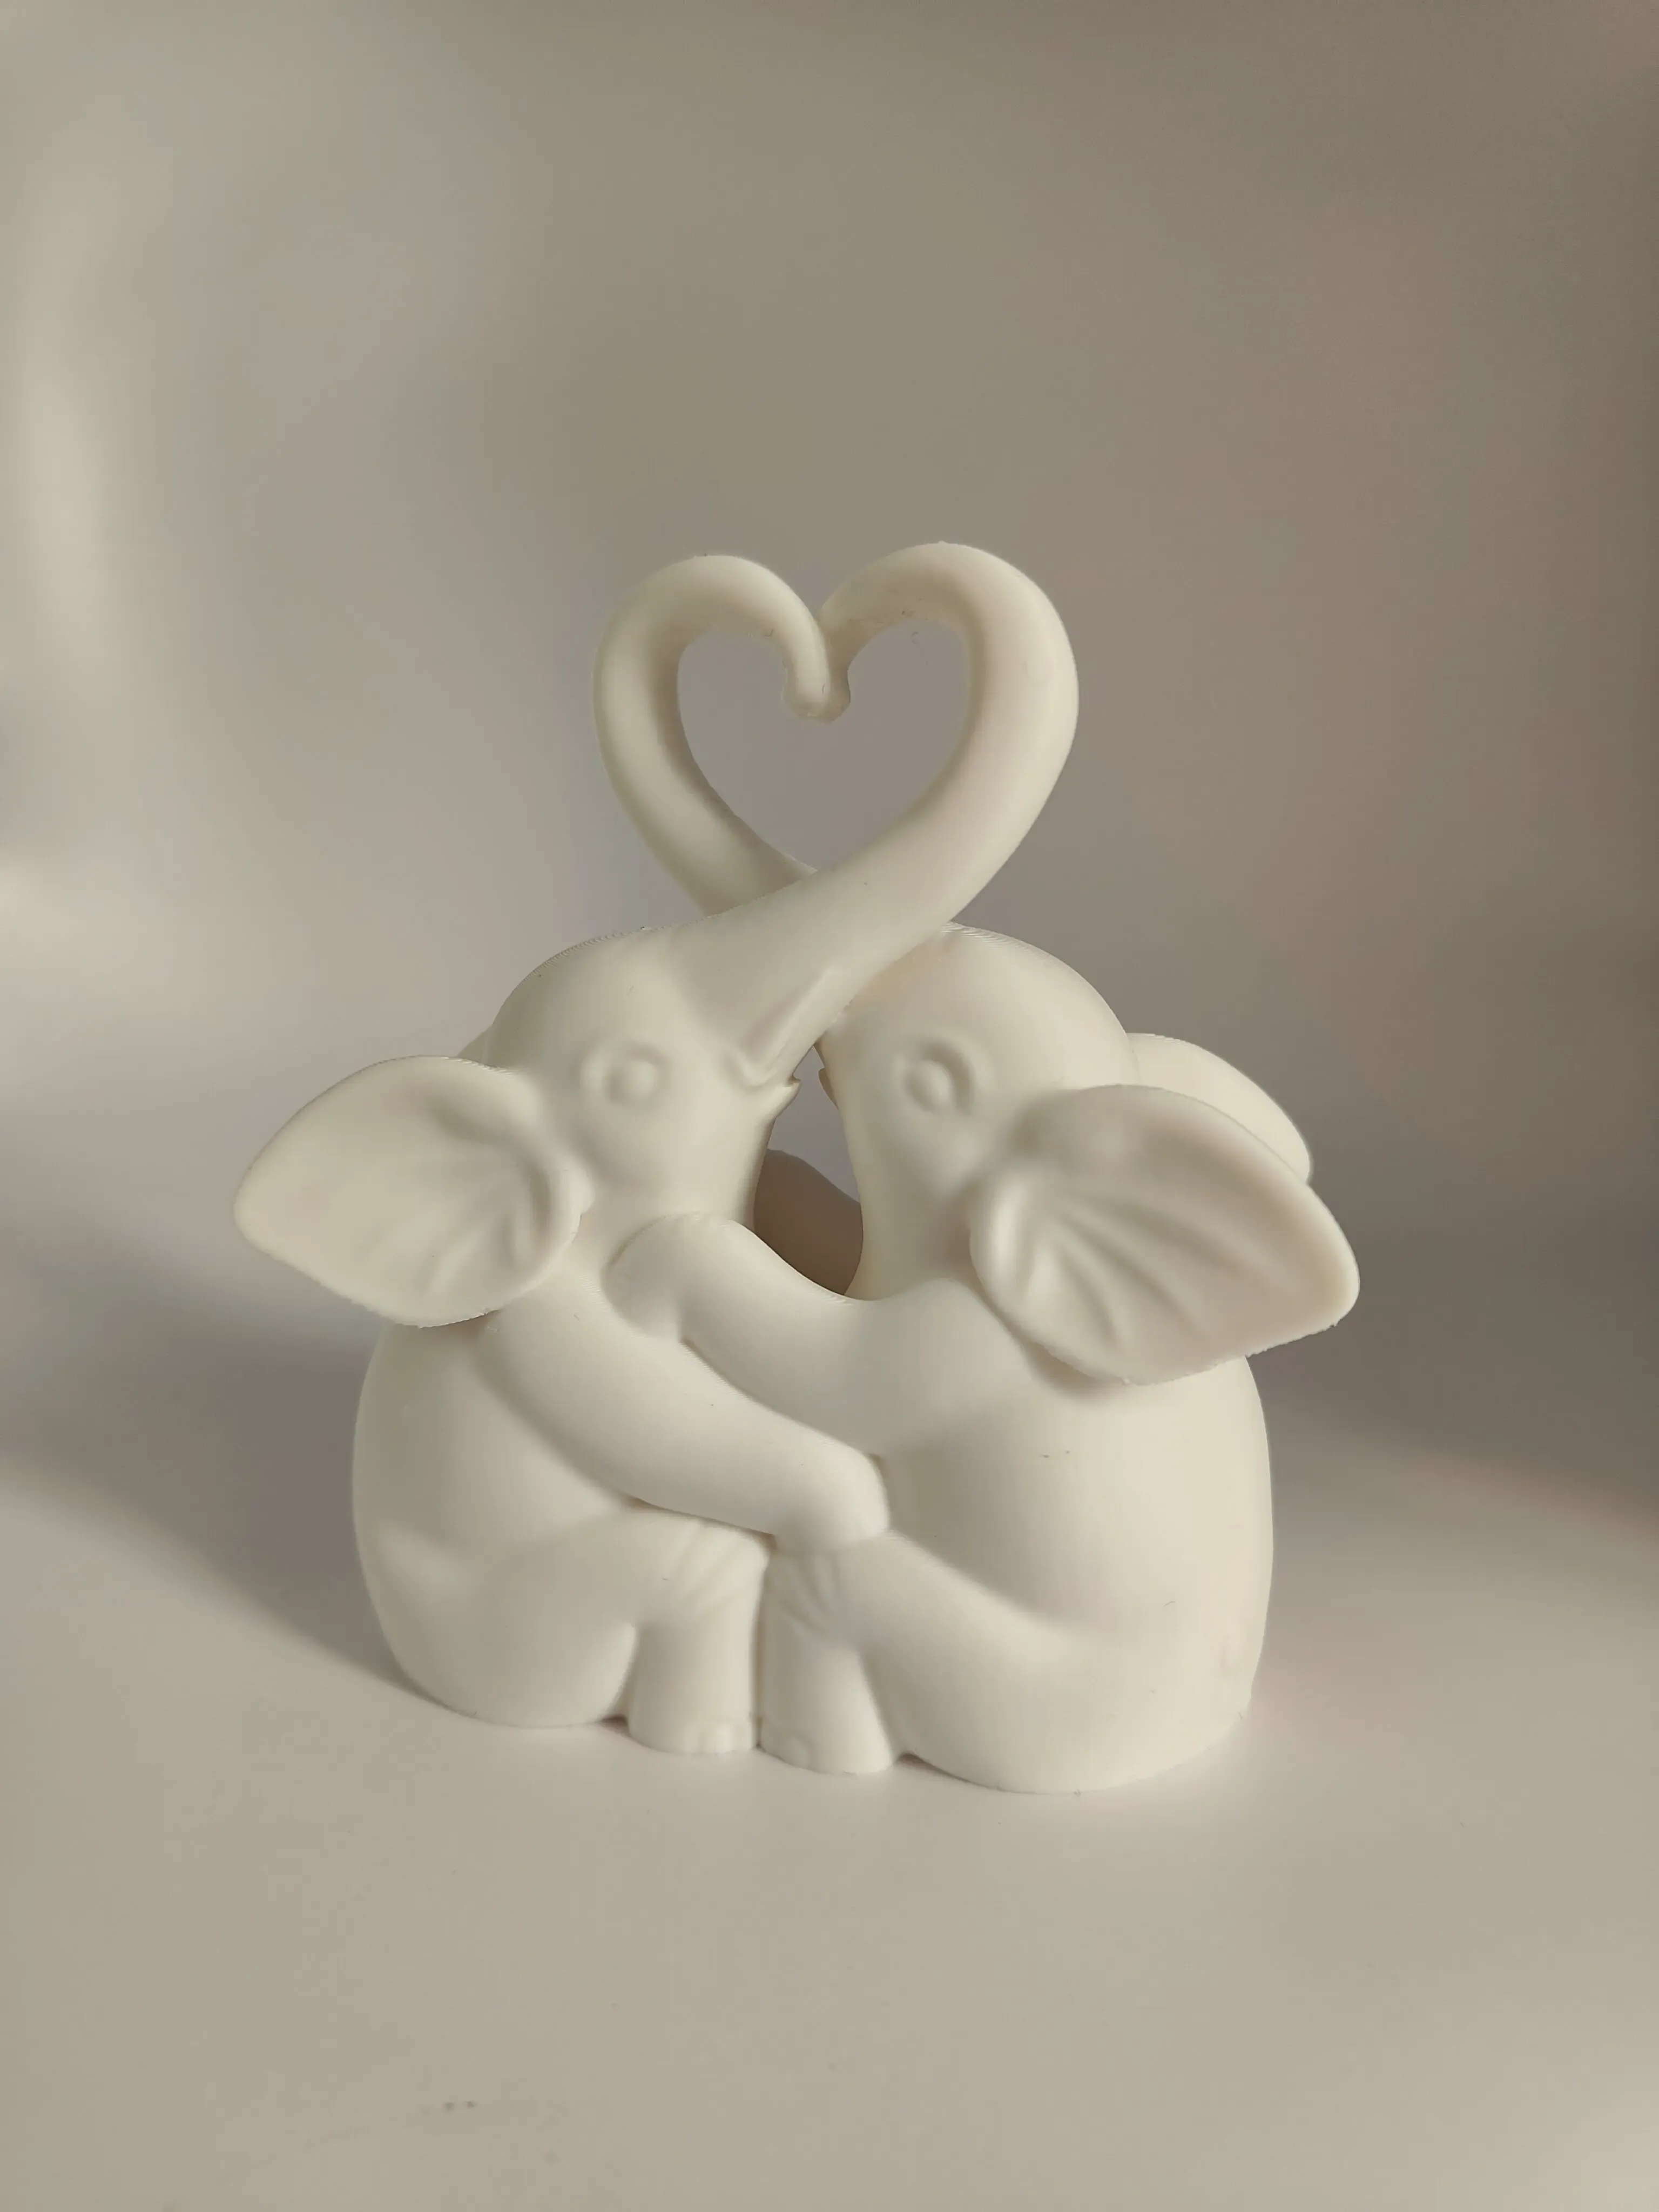 Valentine's elephants sculpture, cute elephants form a heart